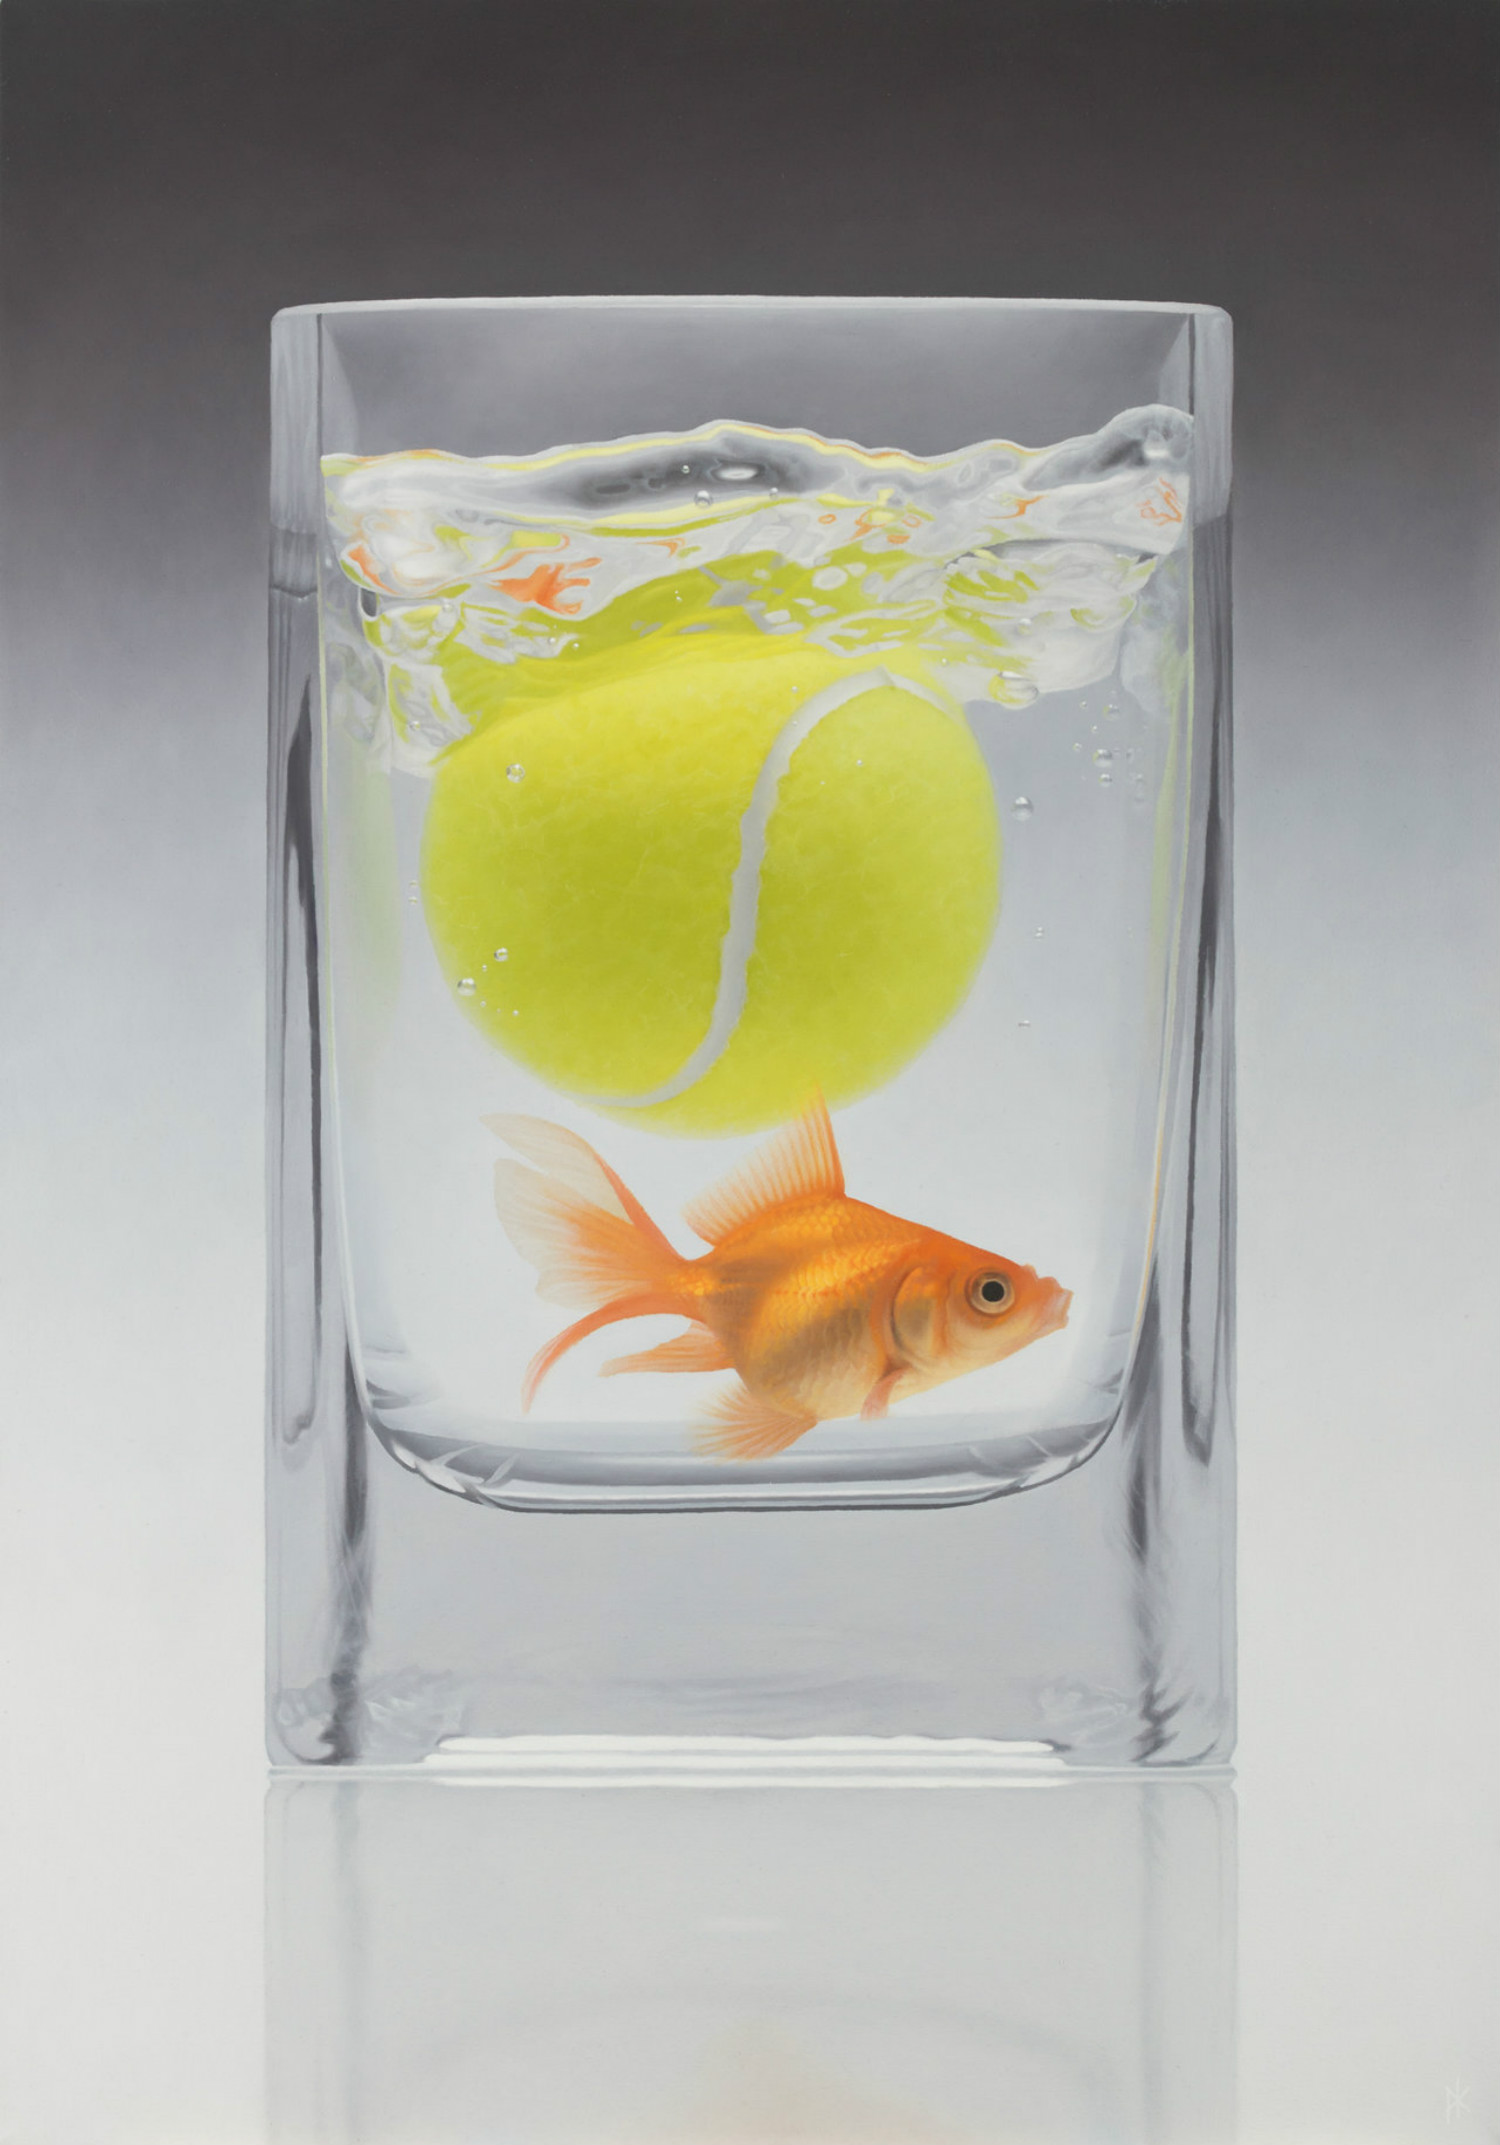 patrick kramer hyperrealist paintings fetch goldfish tennis ball